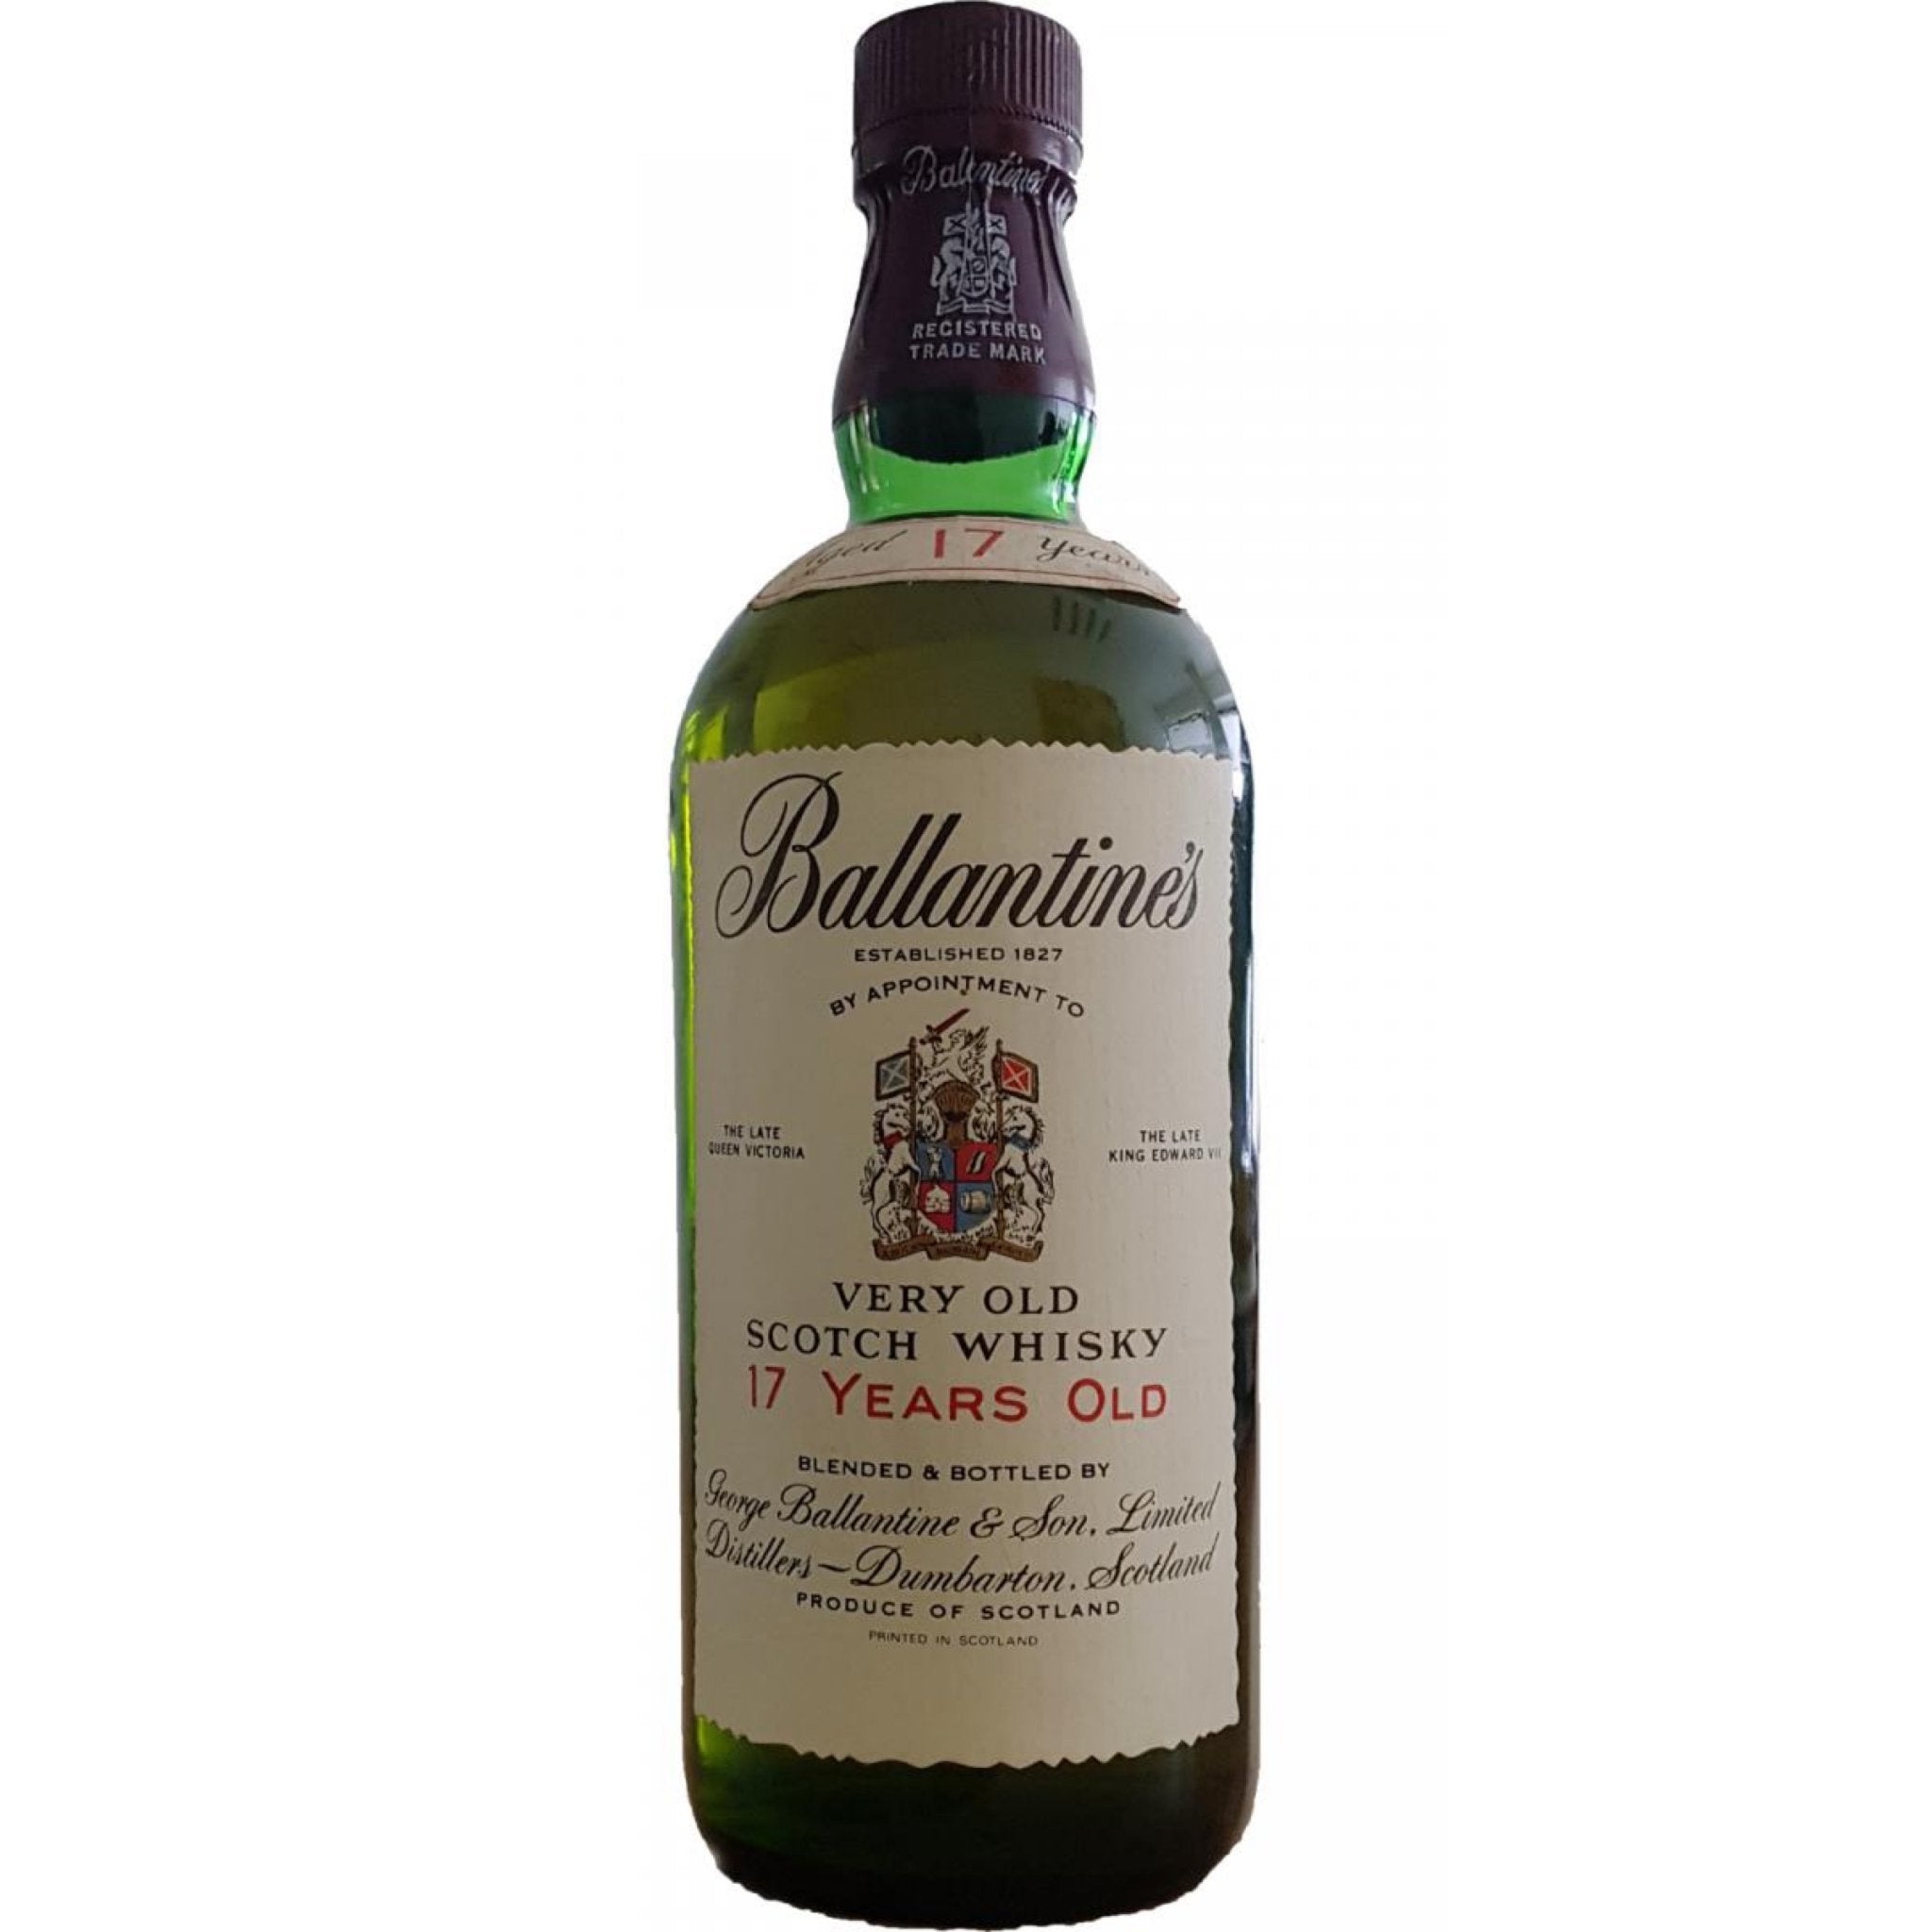 Ballantine's Finest Scotch Whisky George Ballantine & Son